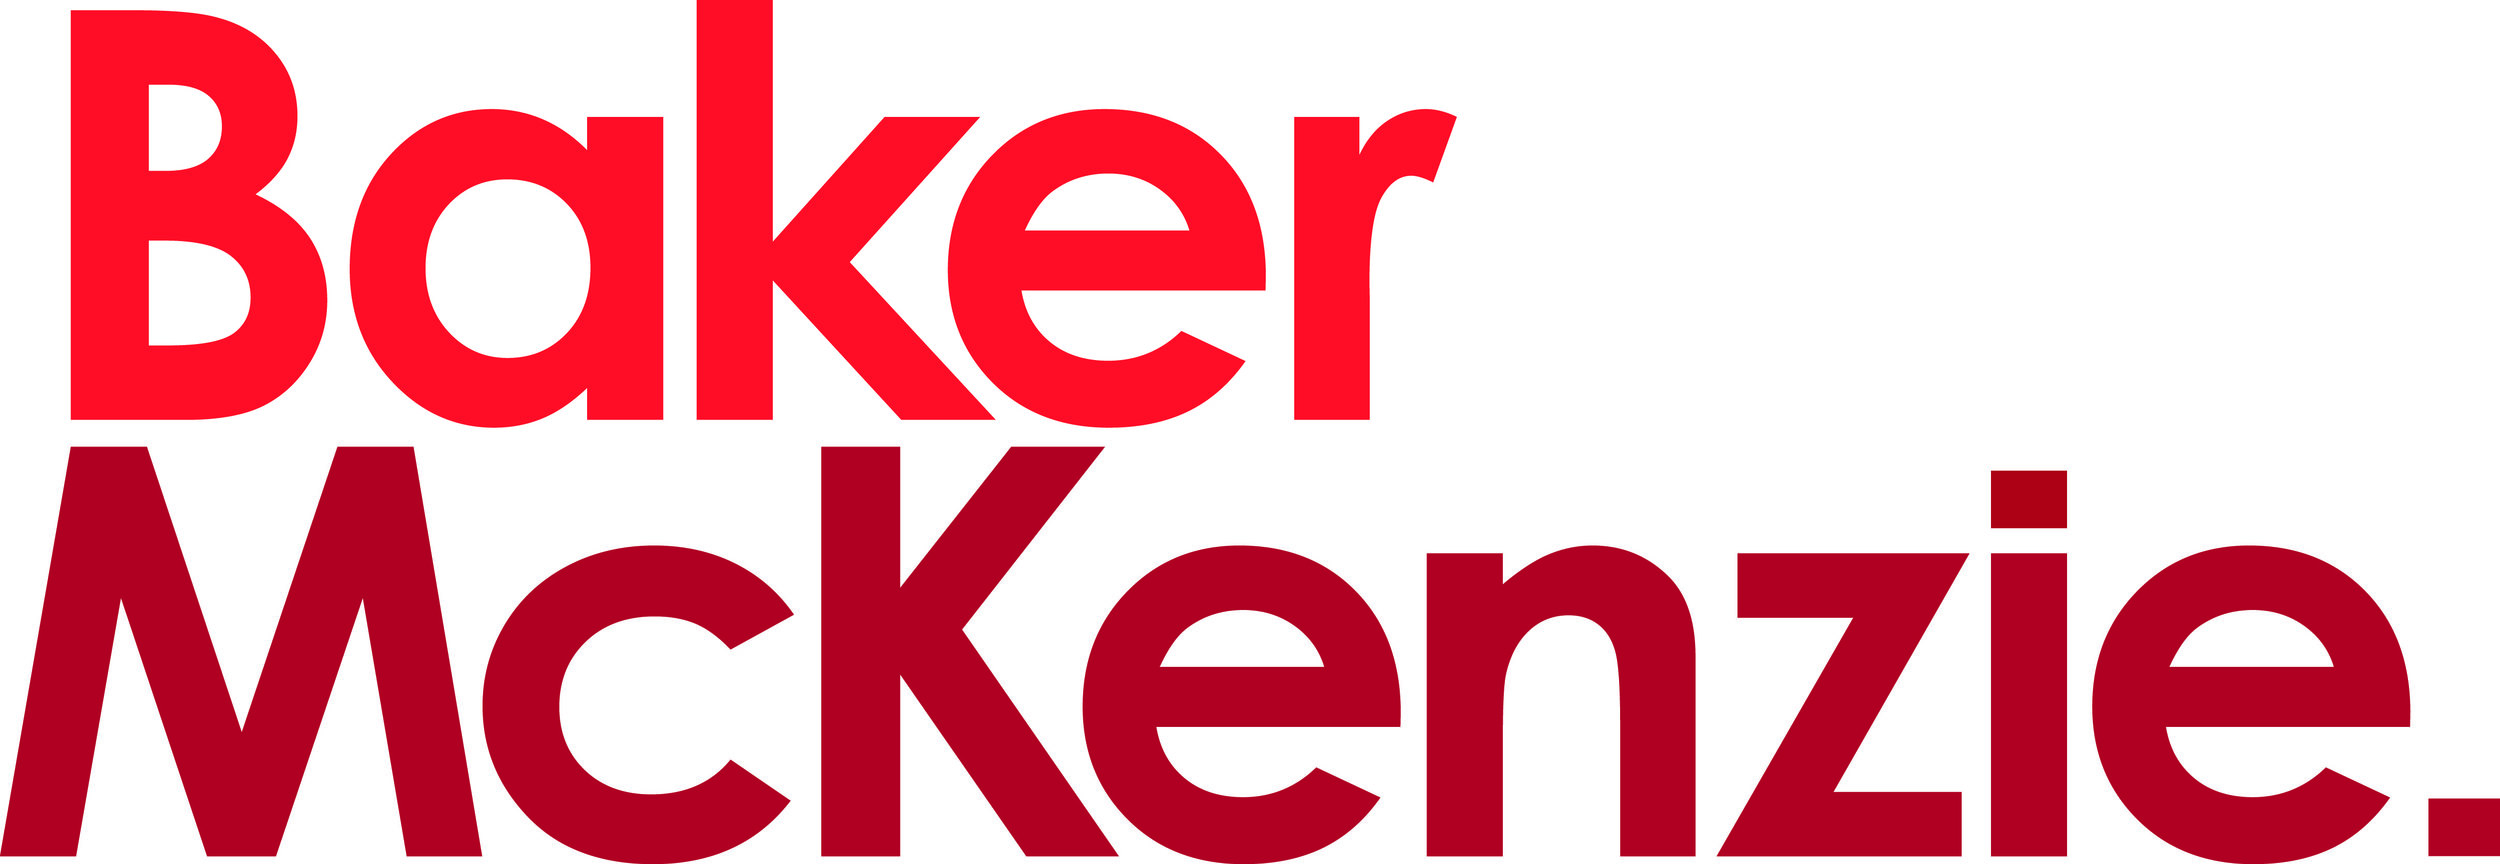 BakerMcKenzie logo.png